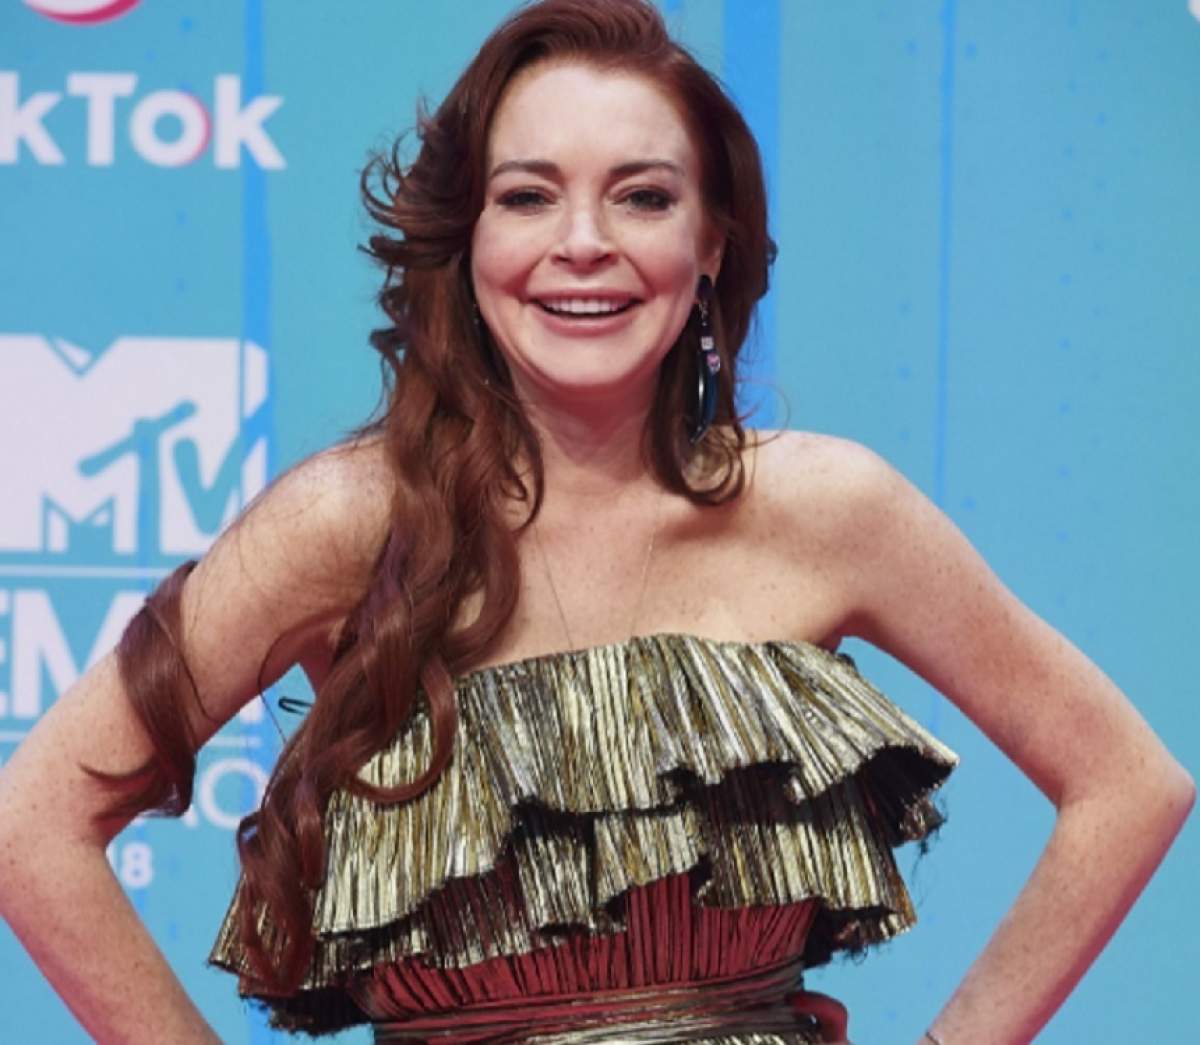 FOTO / Lindsay Lohan, amețită de aburii alcoolului la MTV Music Awards. Vedeta a bifat o apariție horror